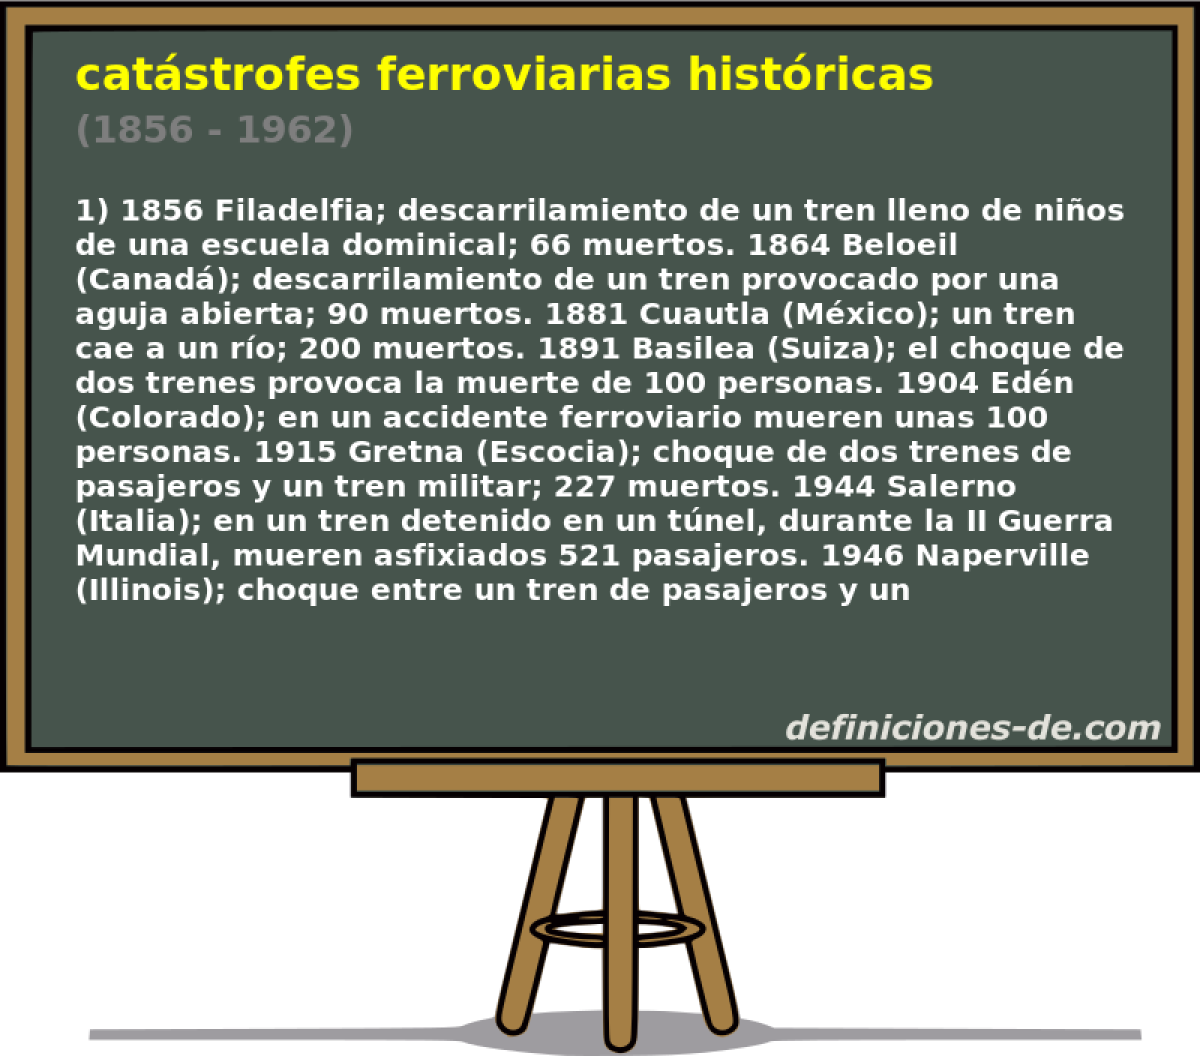 catstrofes ferroviarias histricas (1856 - 1962)